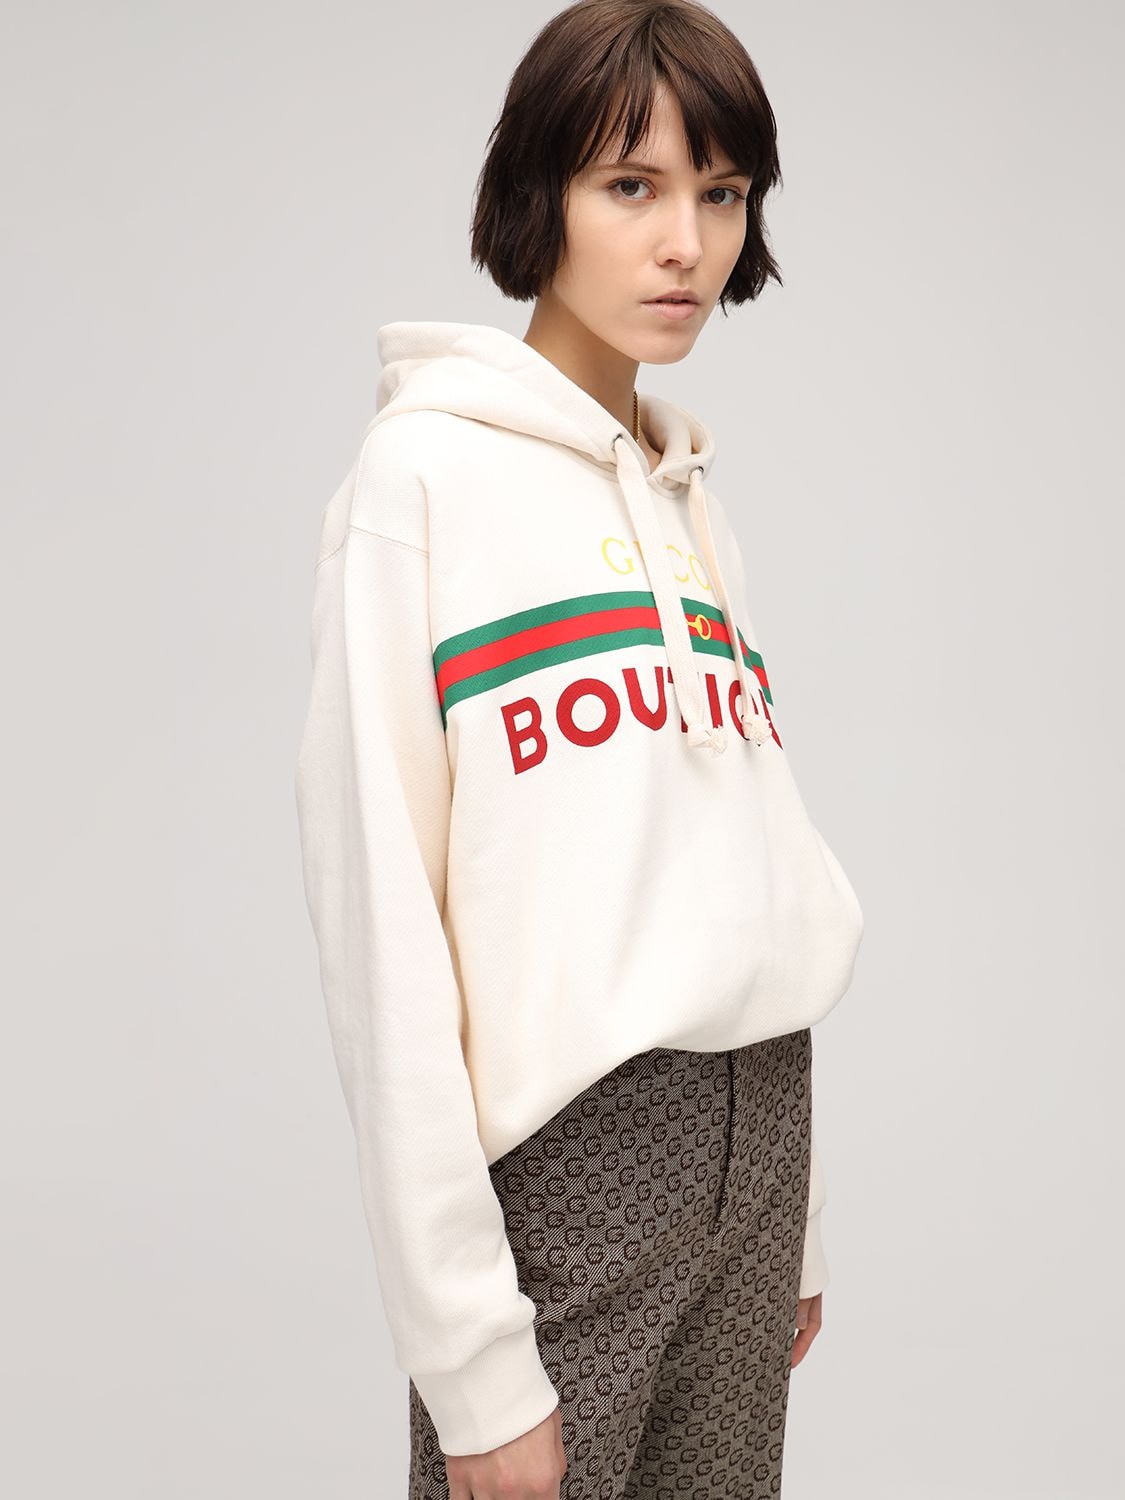 Gucci Boutique print sweatshirt